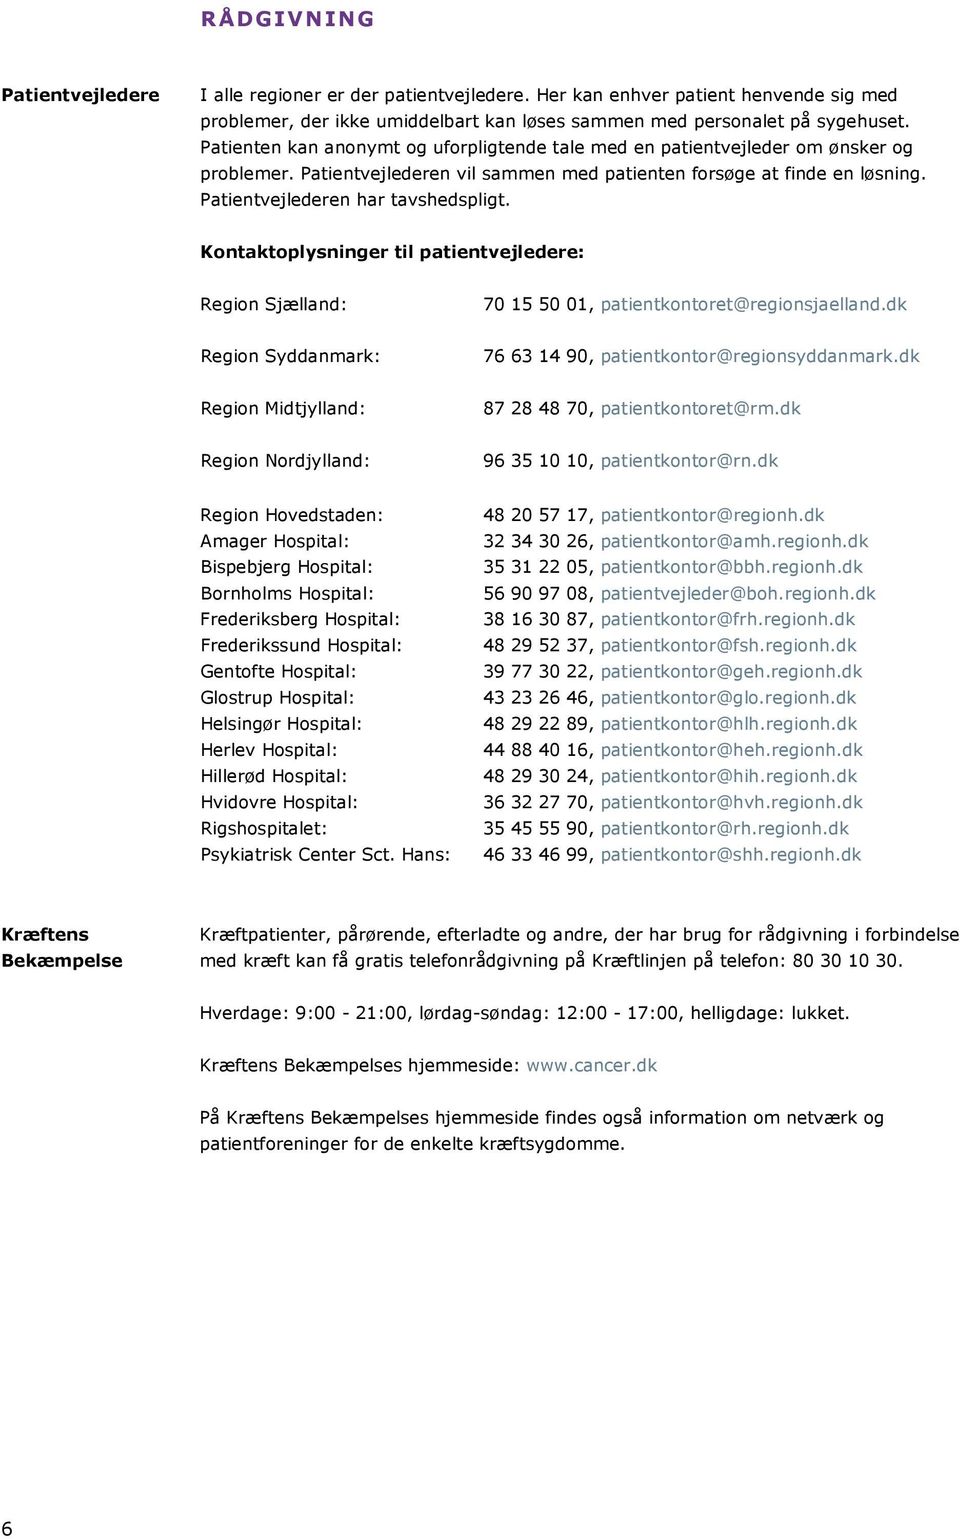 Kontaktoplysninger til patientvejledere: Region Sjælland: 70 15 50 01, patientkontoret@regionsjaelland.dk Region Syddanmark: 76 63 14 90, patientkontor@regionsyddanmark.